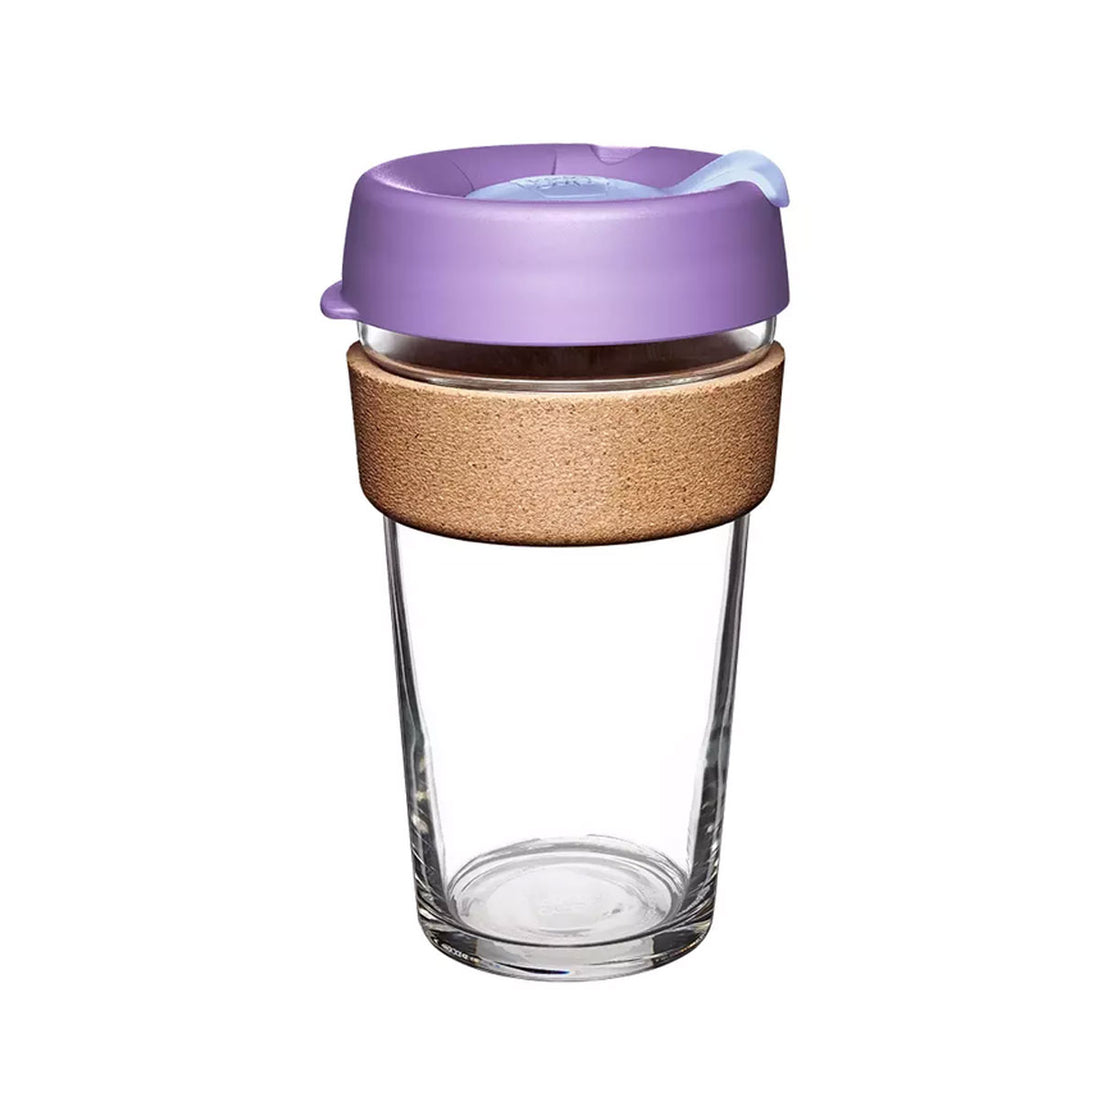 KeepCup Brew Cork Glass Reusable Coffee Cup L 16oz/454ml - Moonlight